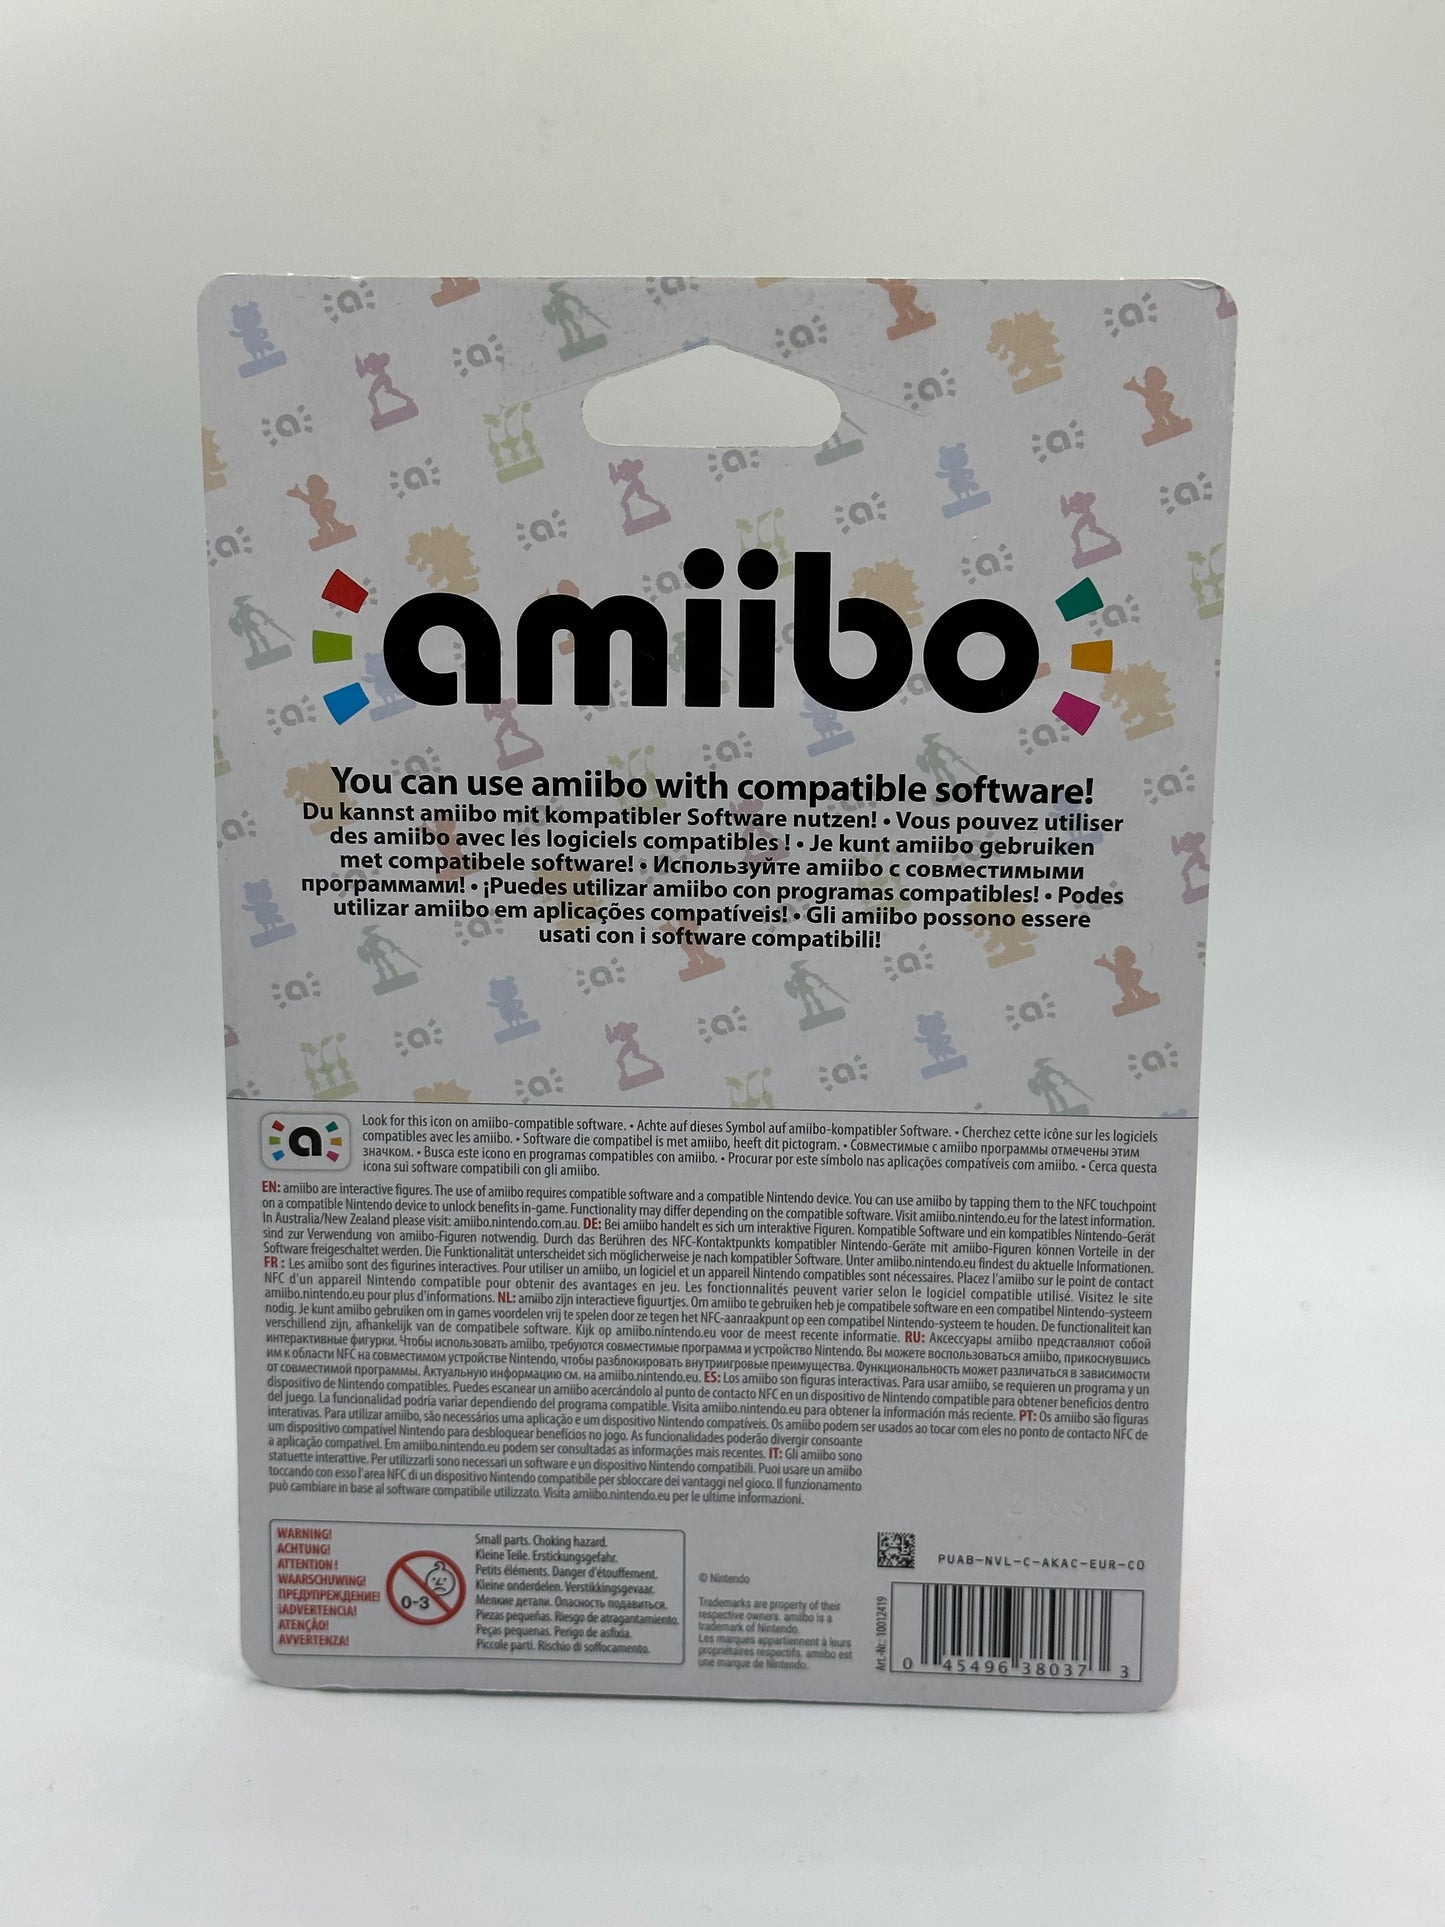 amiibo Link Majora’s Mask Legend Of Zelda